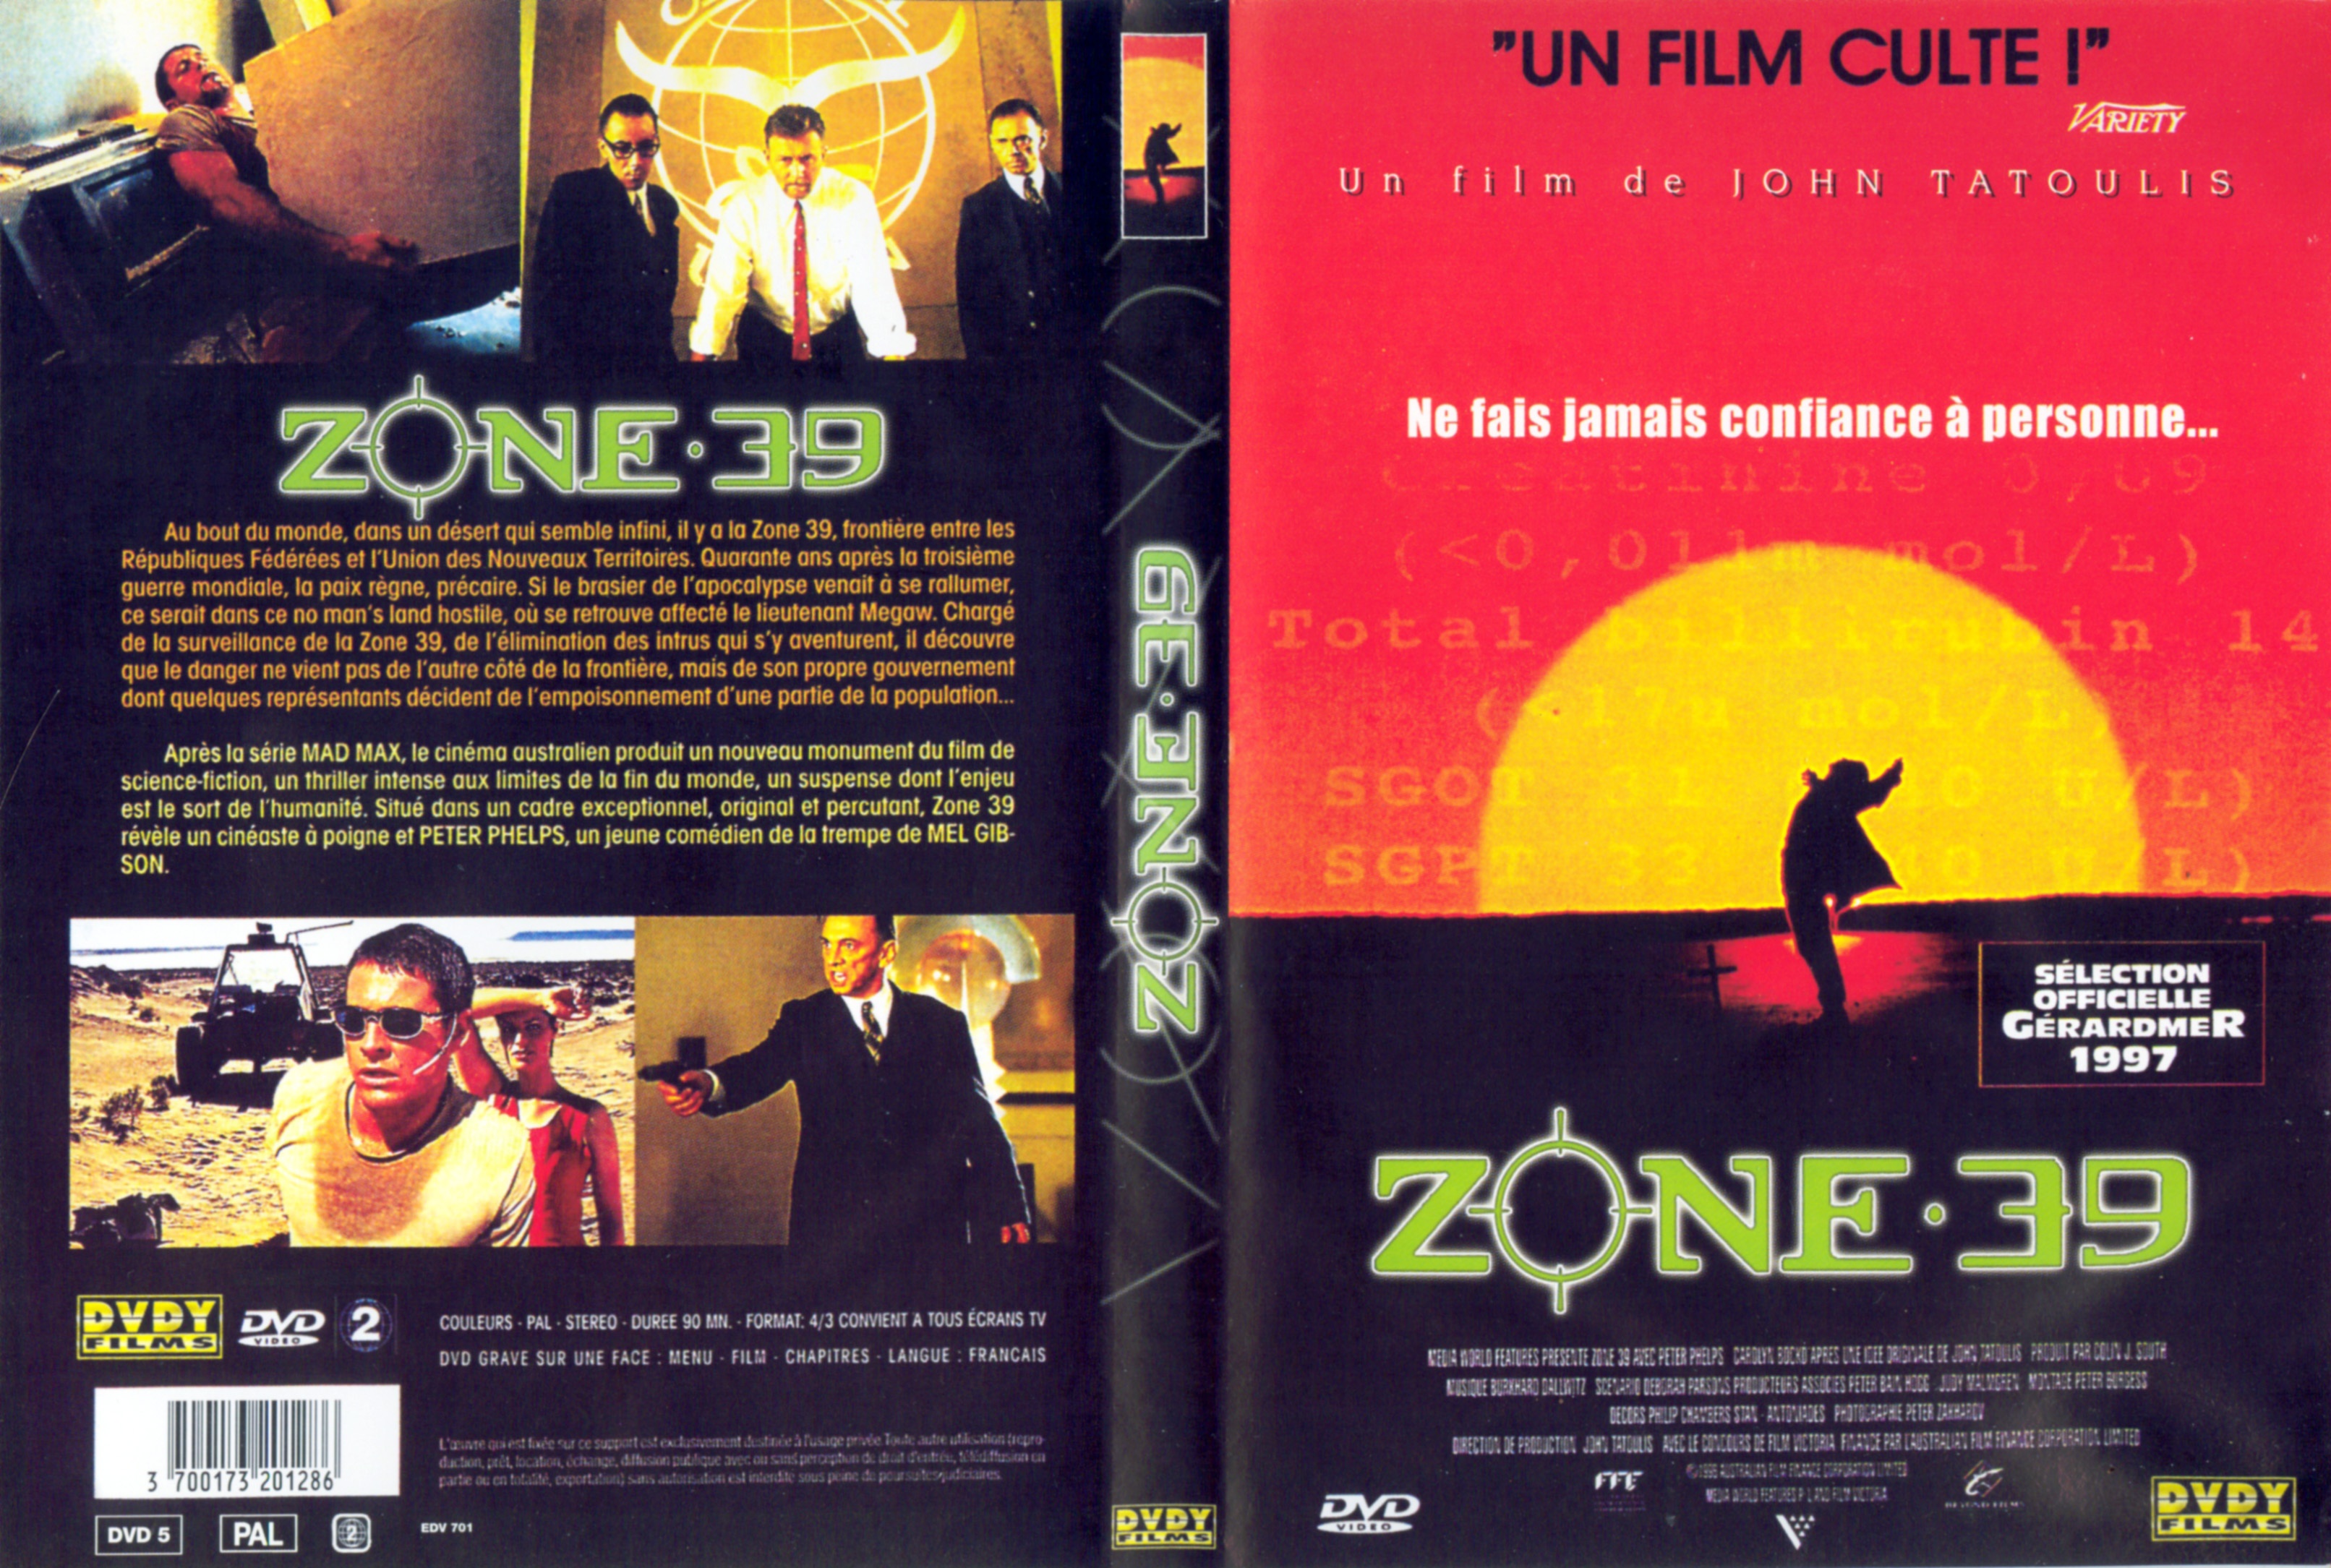 Jaquette DVD Zone 39